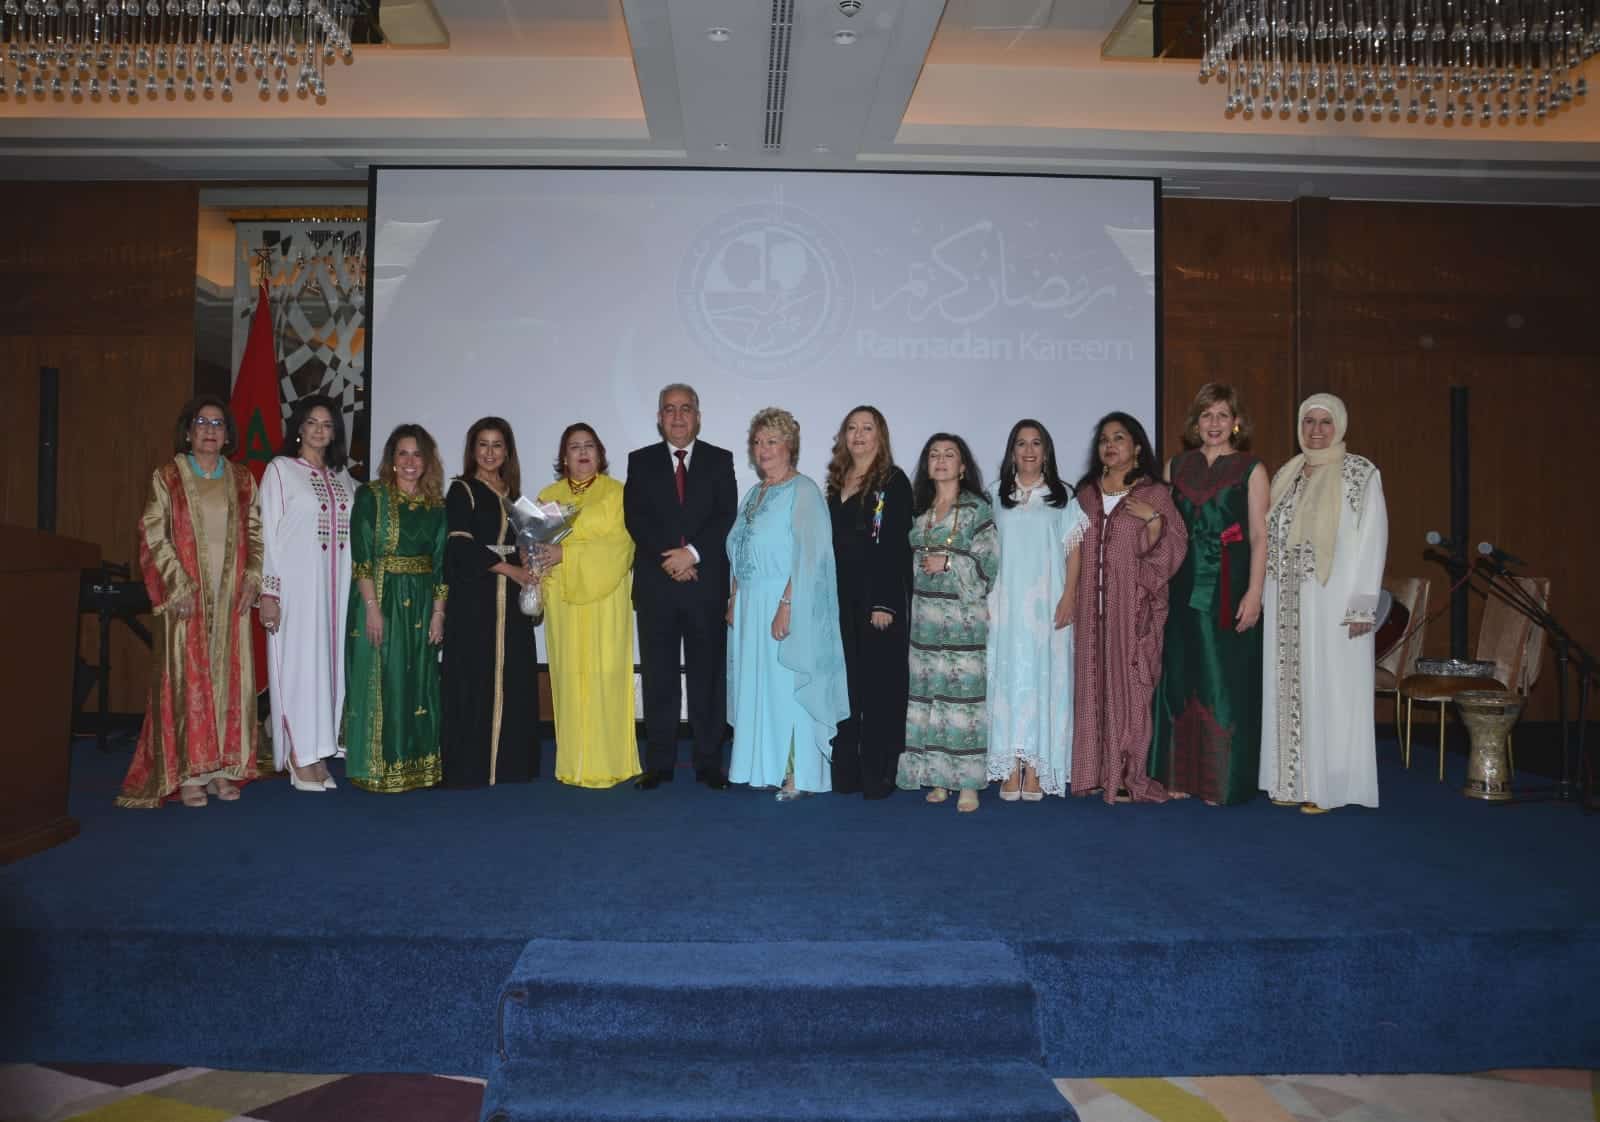 IWG members pose for a photo with the President of IWG Ghada Shawky, Honorary President ofnthe IWG Sheikha Hanouf Bader Mohammed Al-Sabah, Ambassador of the Kingdom of Morocco Ali Benaissa and his spouse Aicha Al-Fasi.